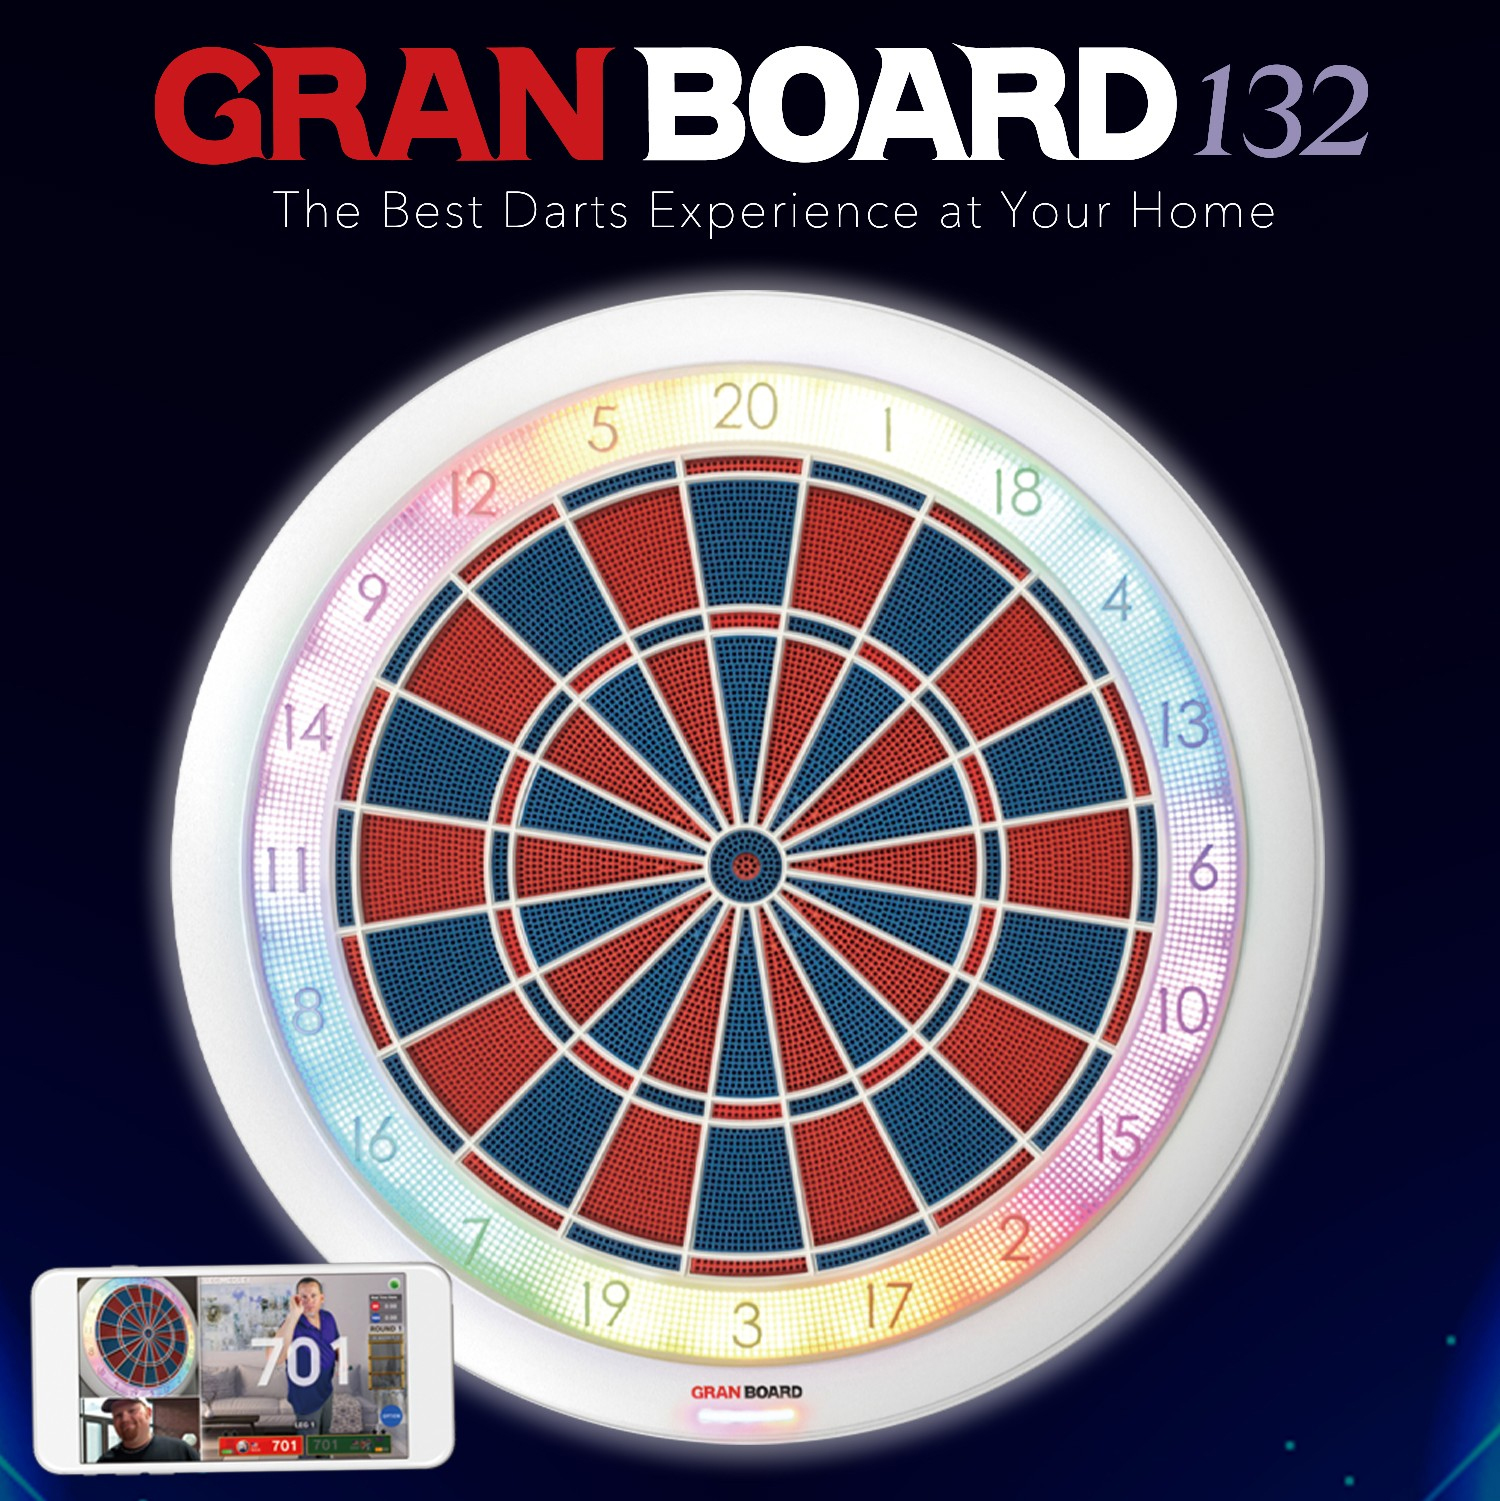 GRANBOARD132 online Dart spielen, das smarte Dartboard Elektronische Dartboards Kilo80.de